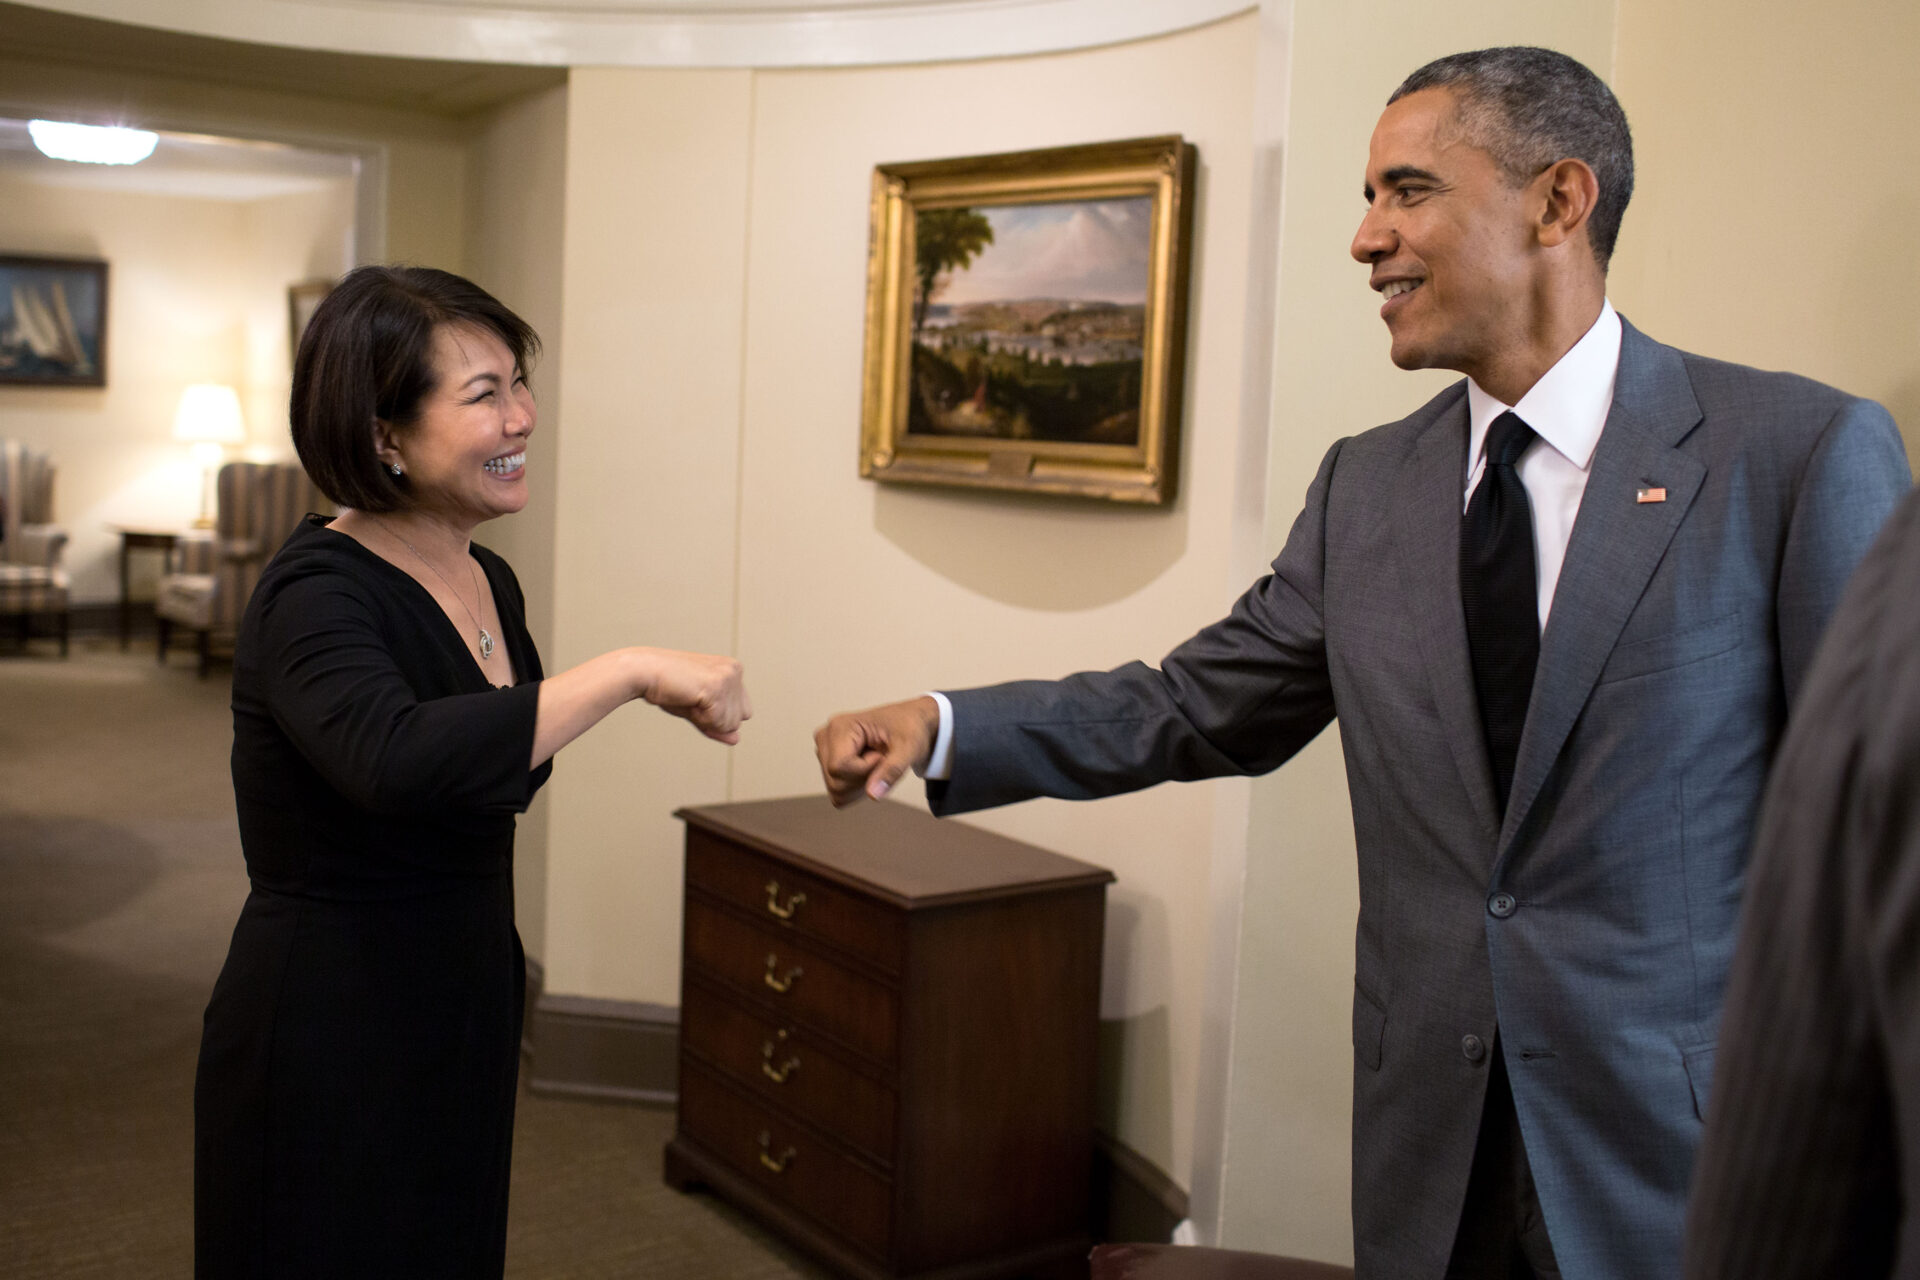 Miyoung Chun_Scientist _ Entrepreneur with President Obama